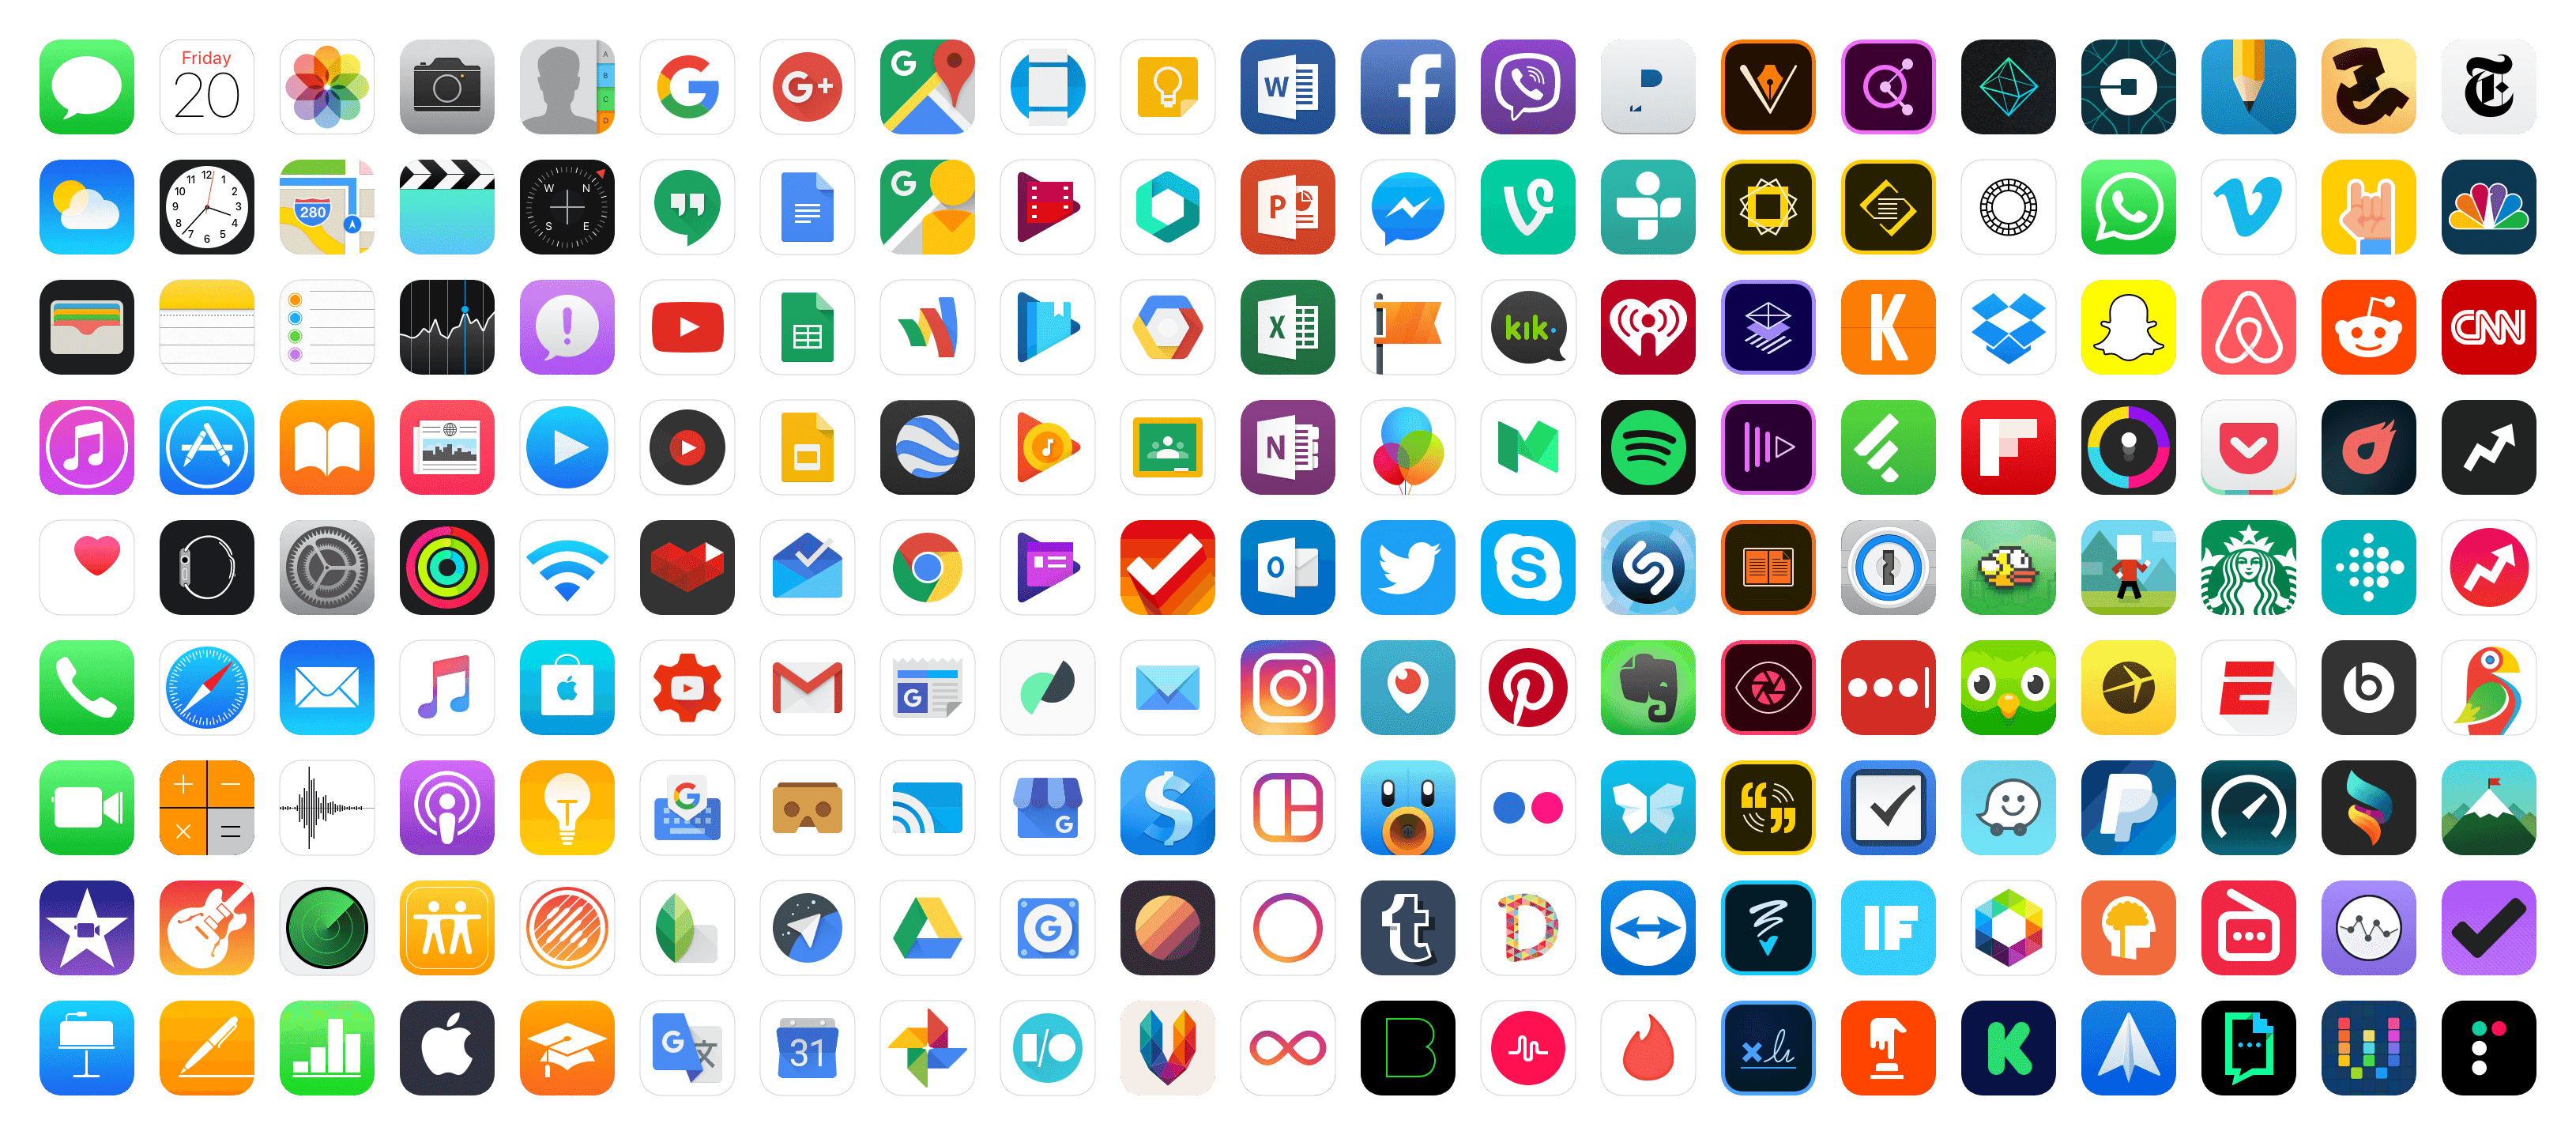 ✓ App Store